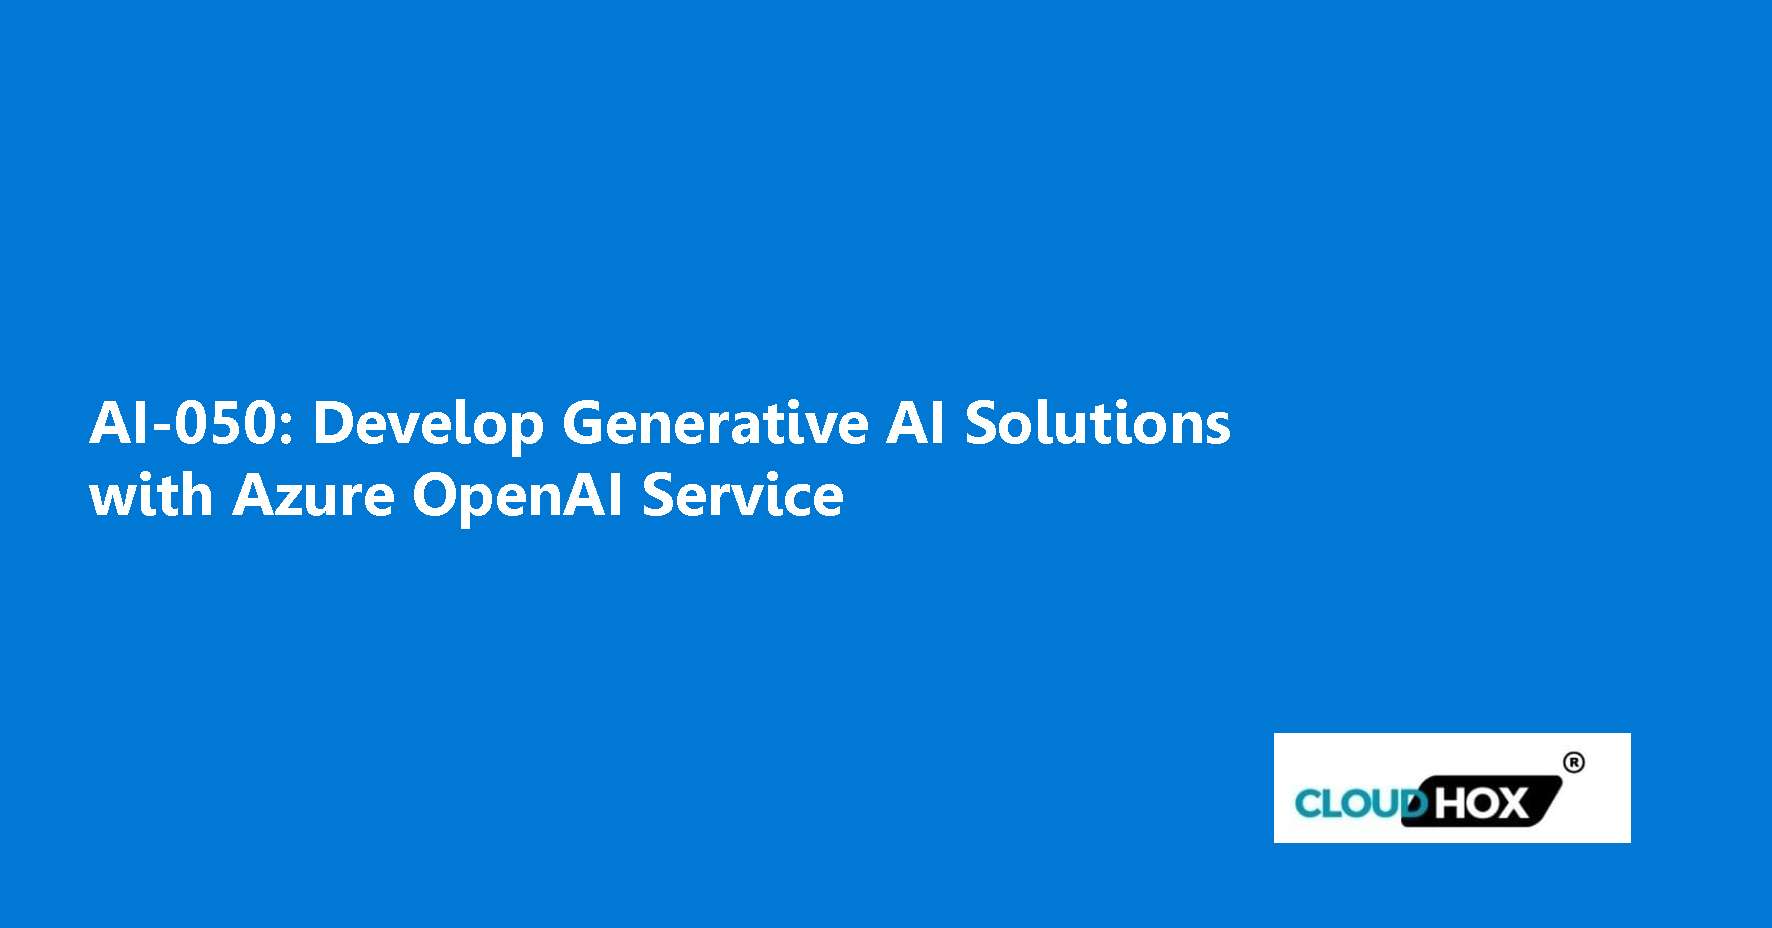 AI-050: Develop Generative AI Solutions with Azure OpenAI Service